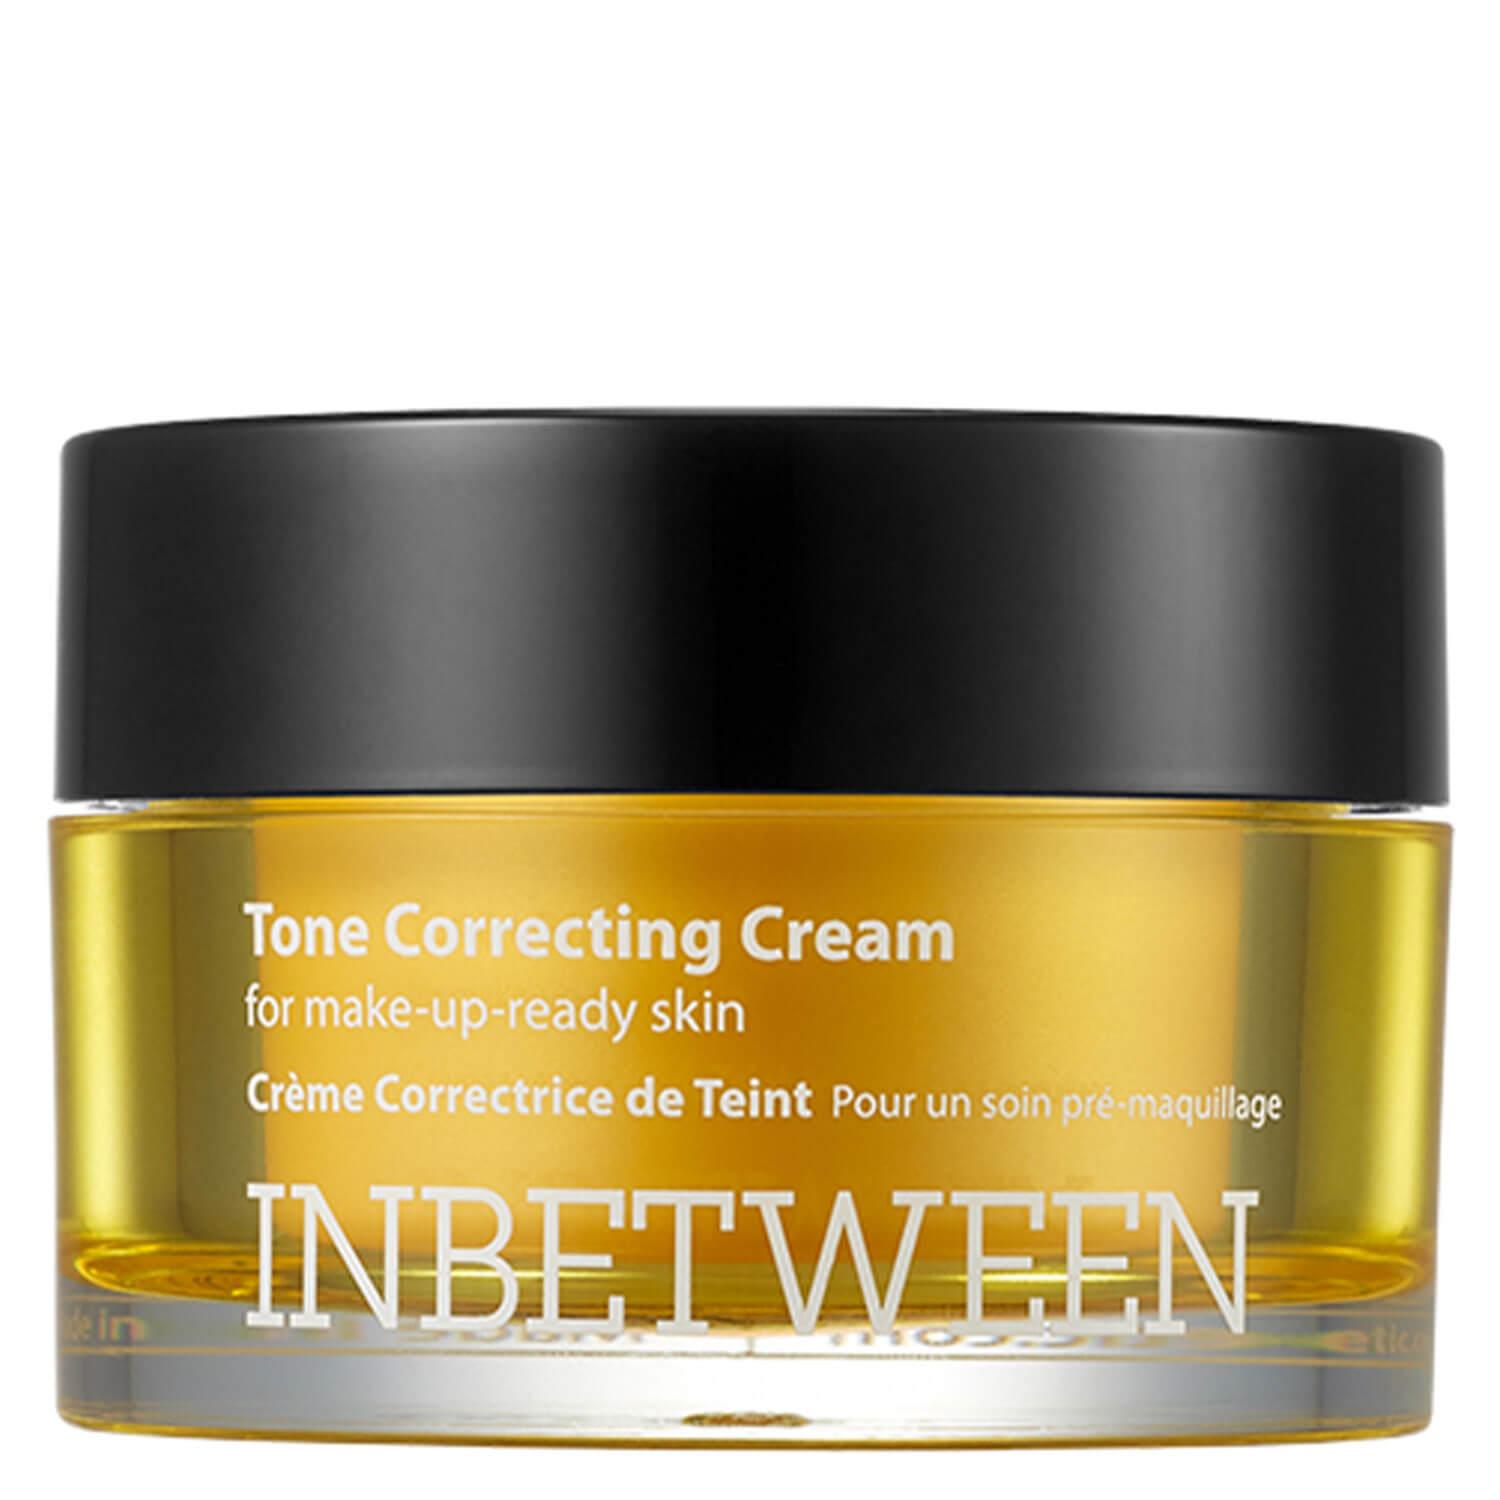 Blithe - Tone Correcting Cream